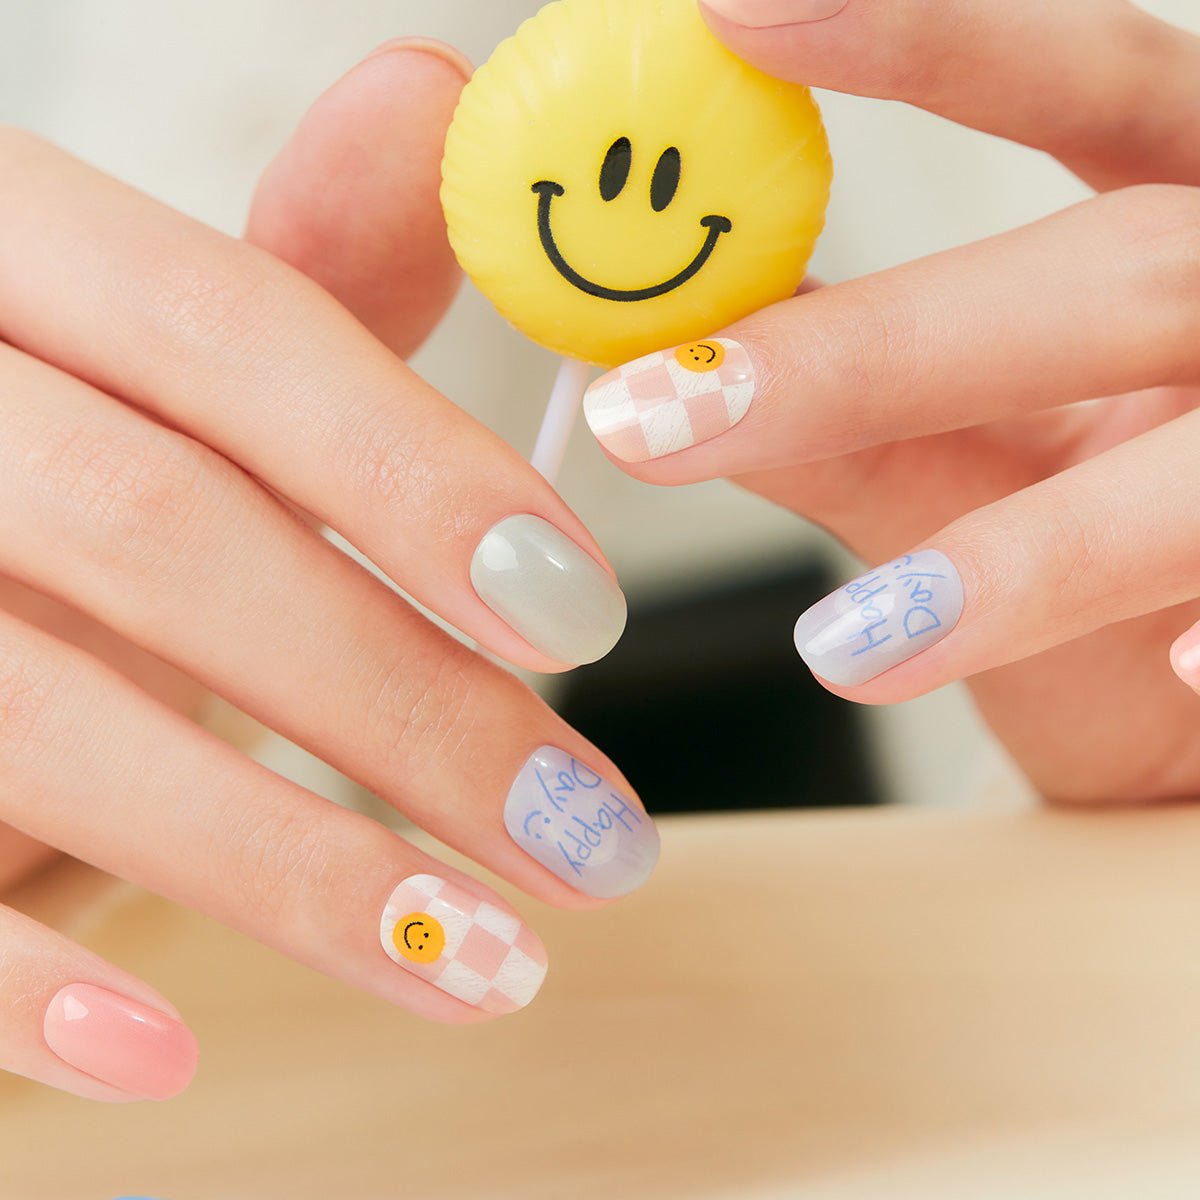 Smile Daisy - Glow Gel Sticker - Manicure - Dashing Diva Singapore